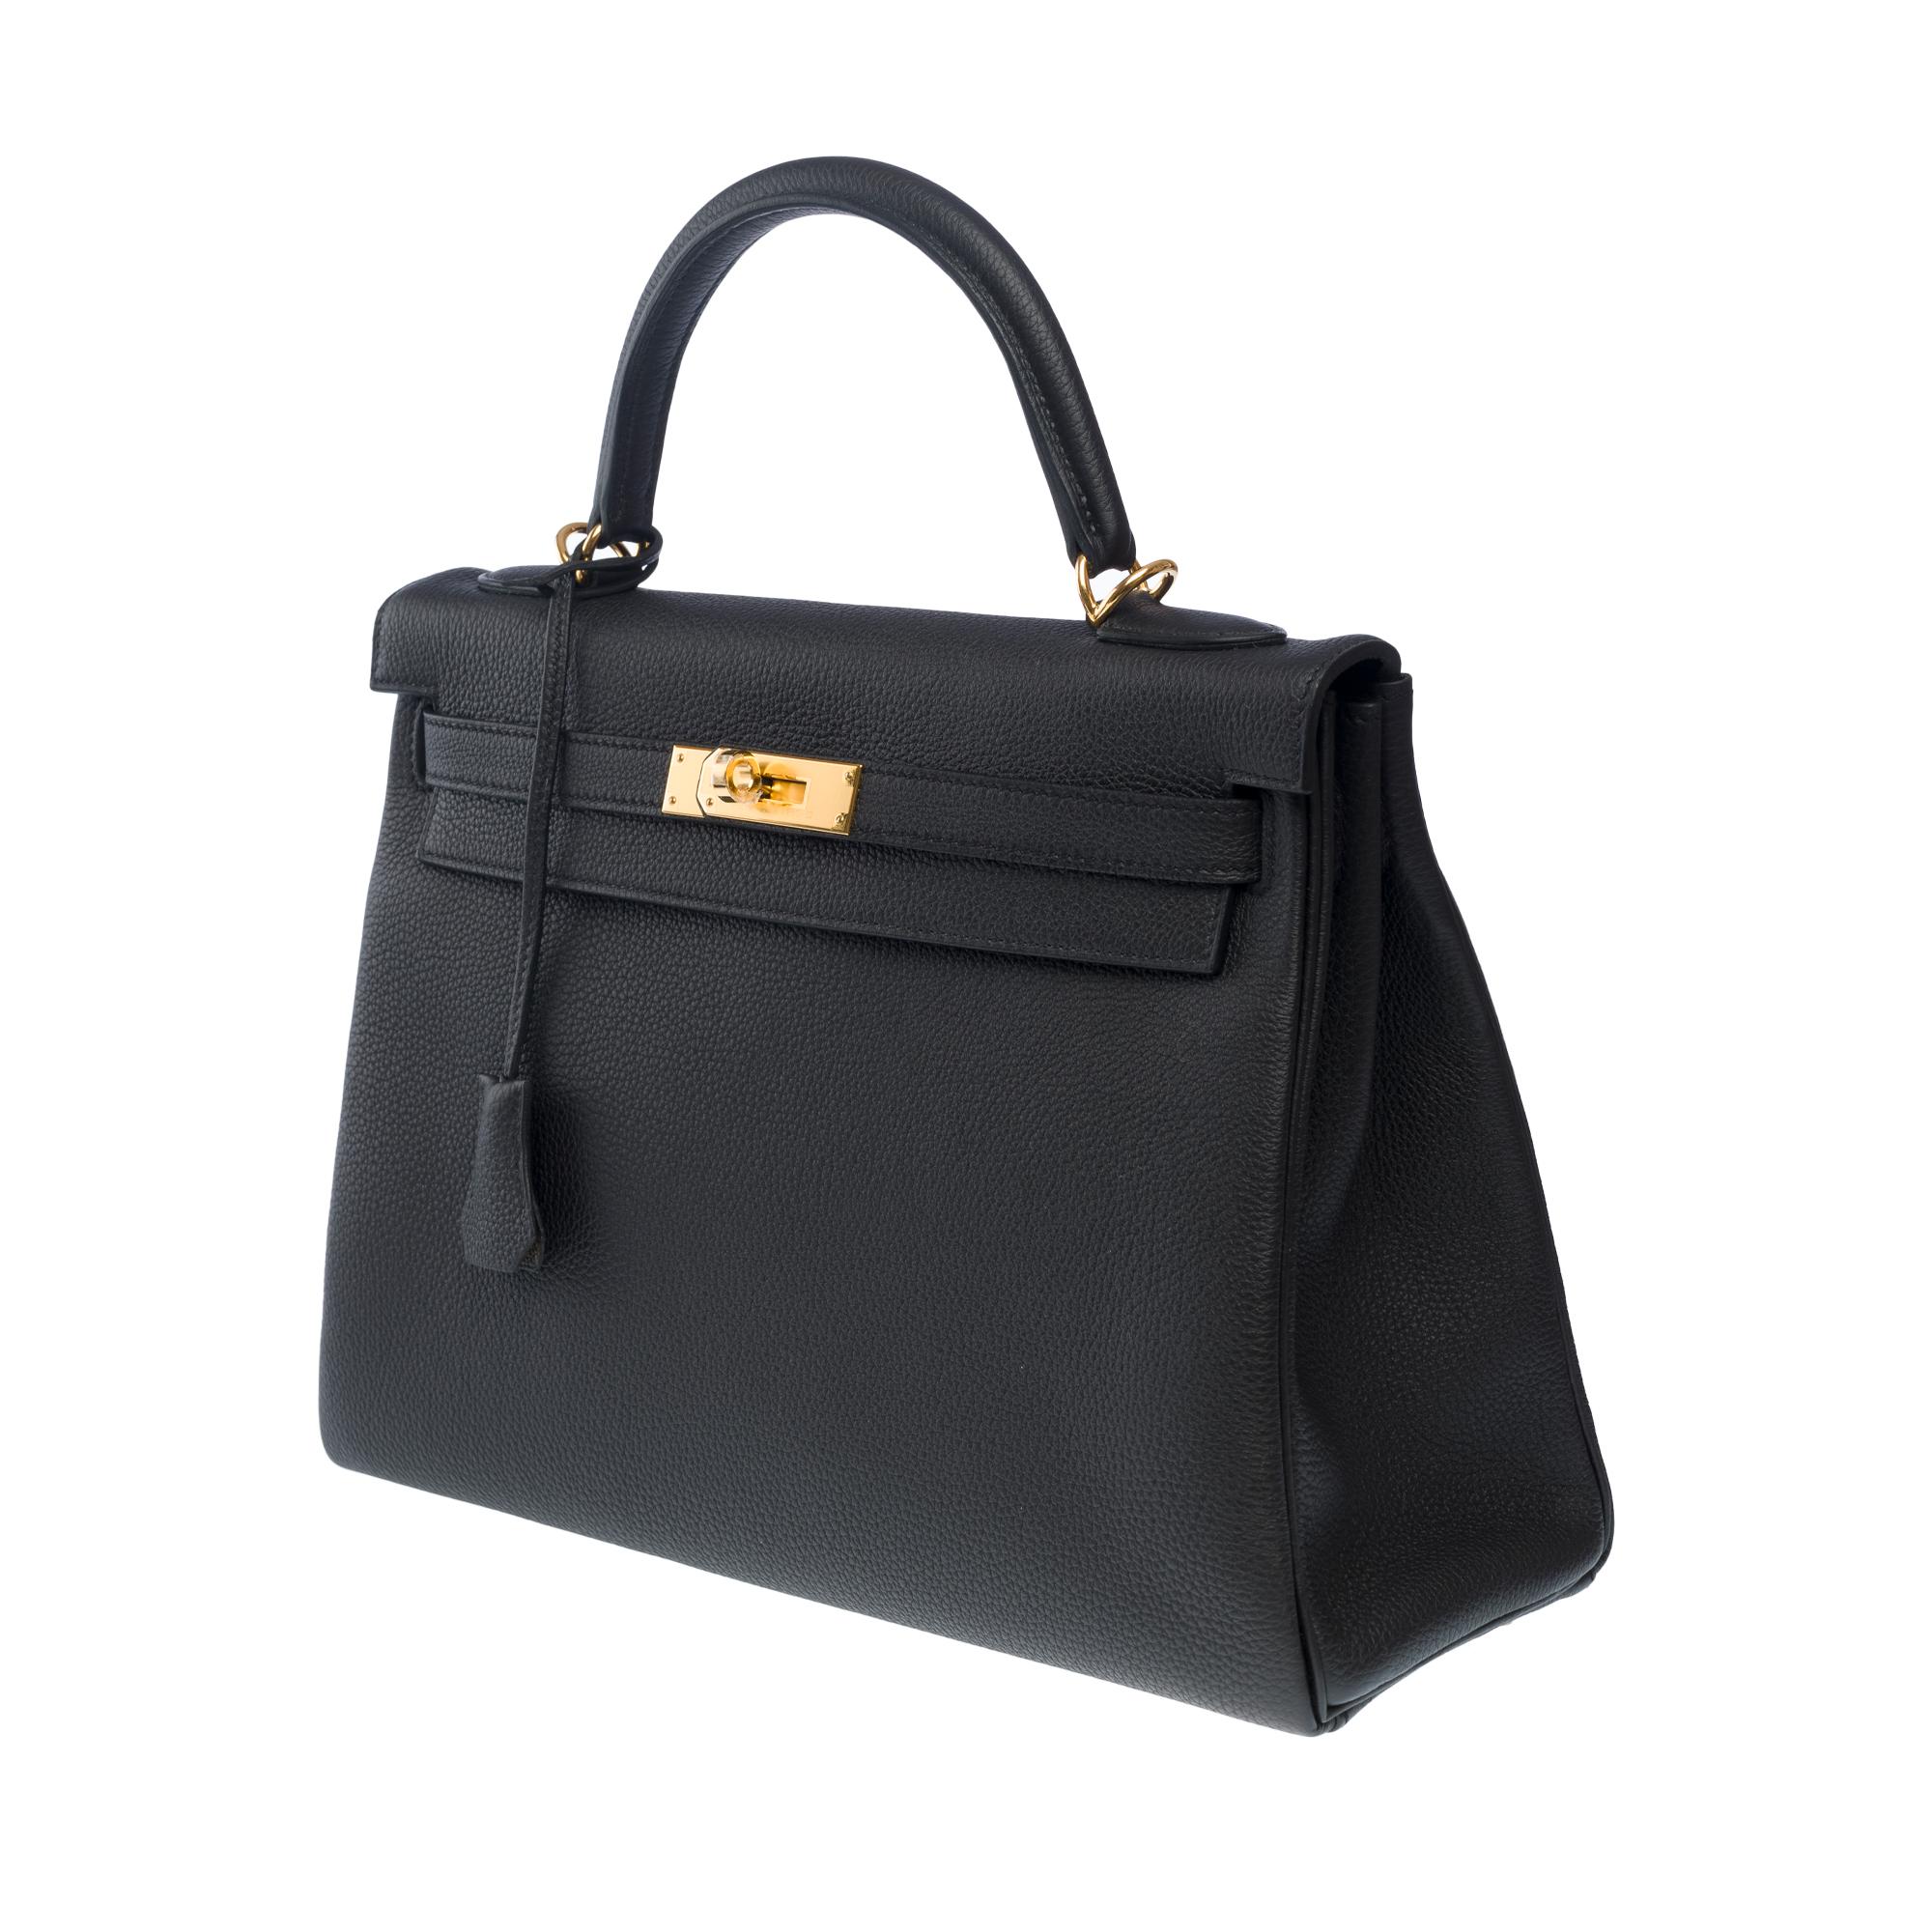 New Hermès Kelly 32 retourne handbag strap in Black Togo leather, GHW 1